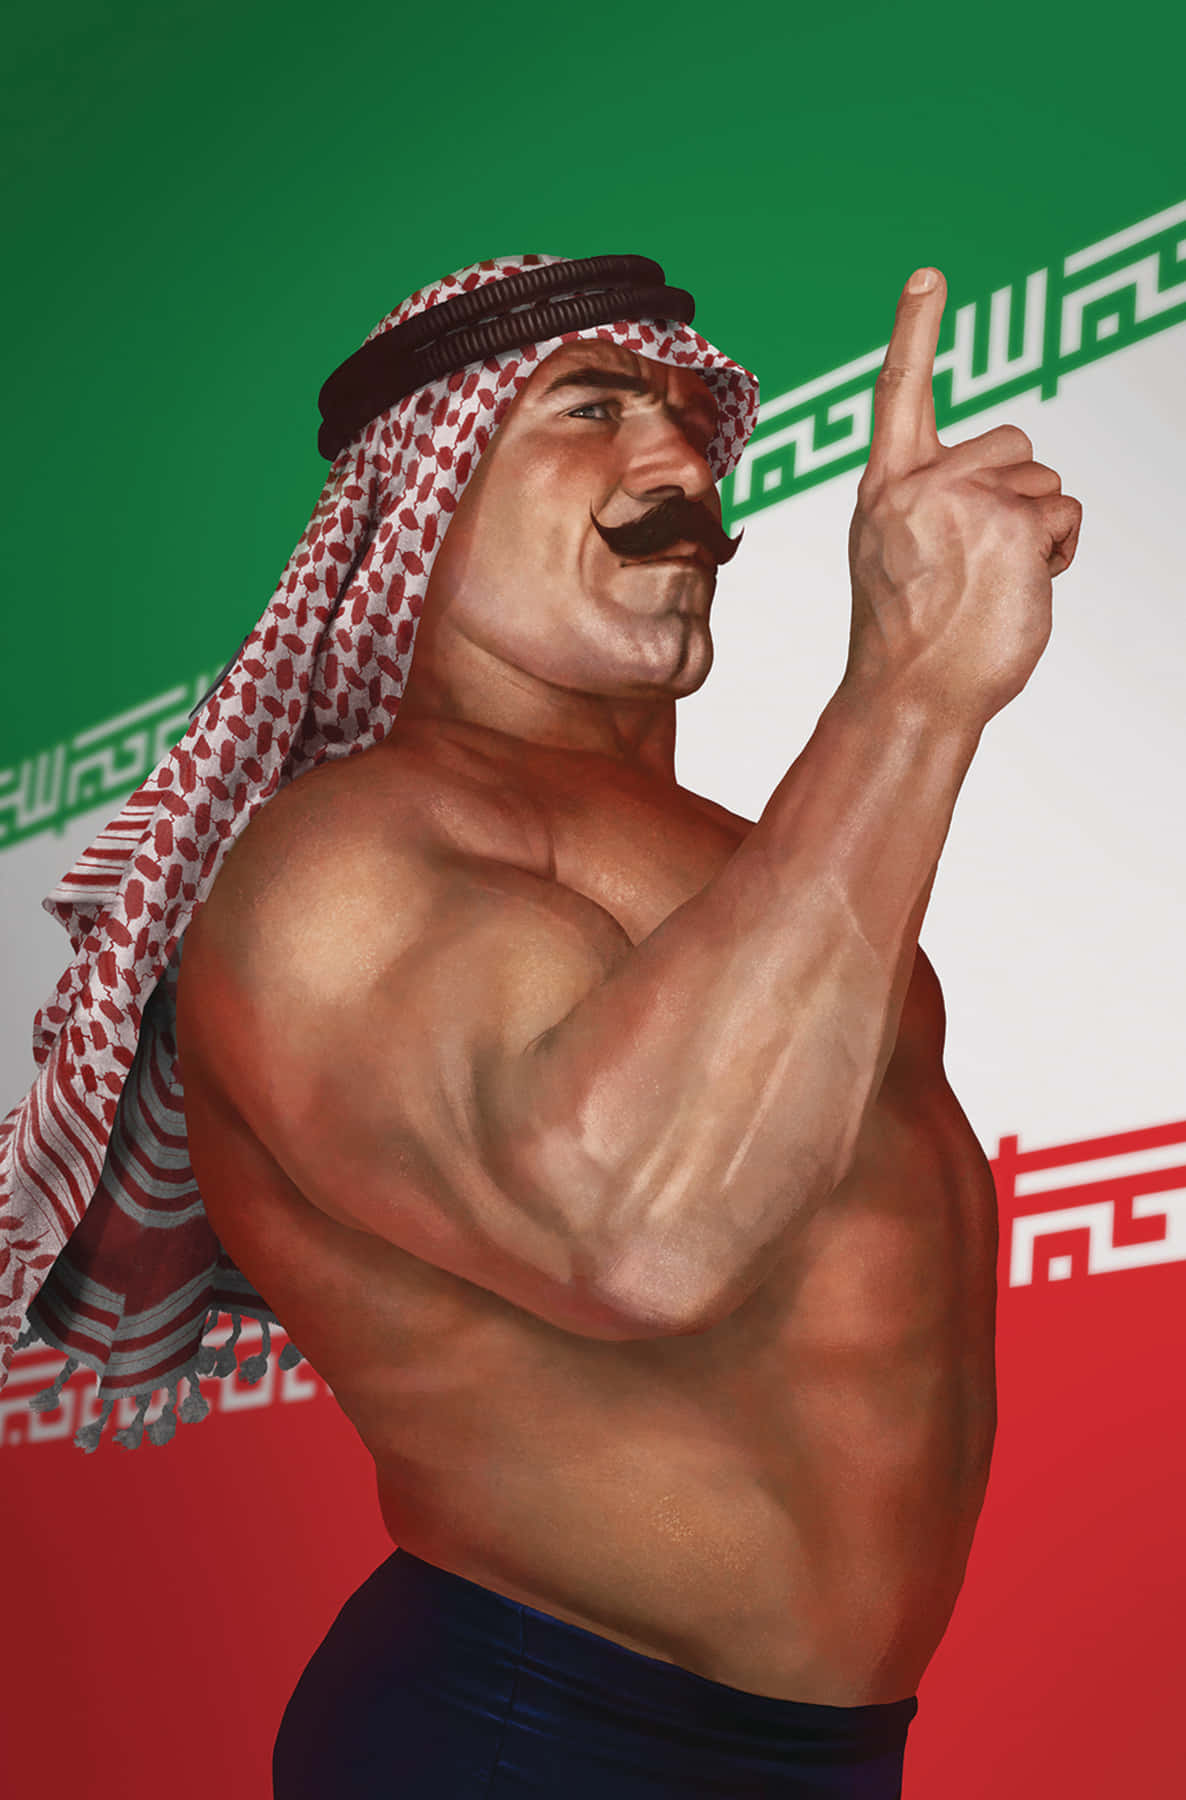 No 1 Iran Wrestler The Iron Shiek Wallpaper